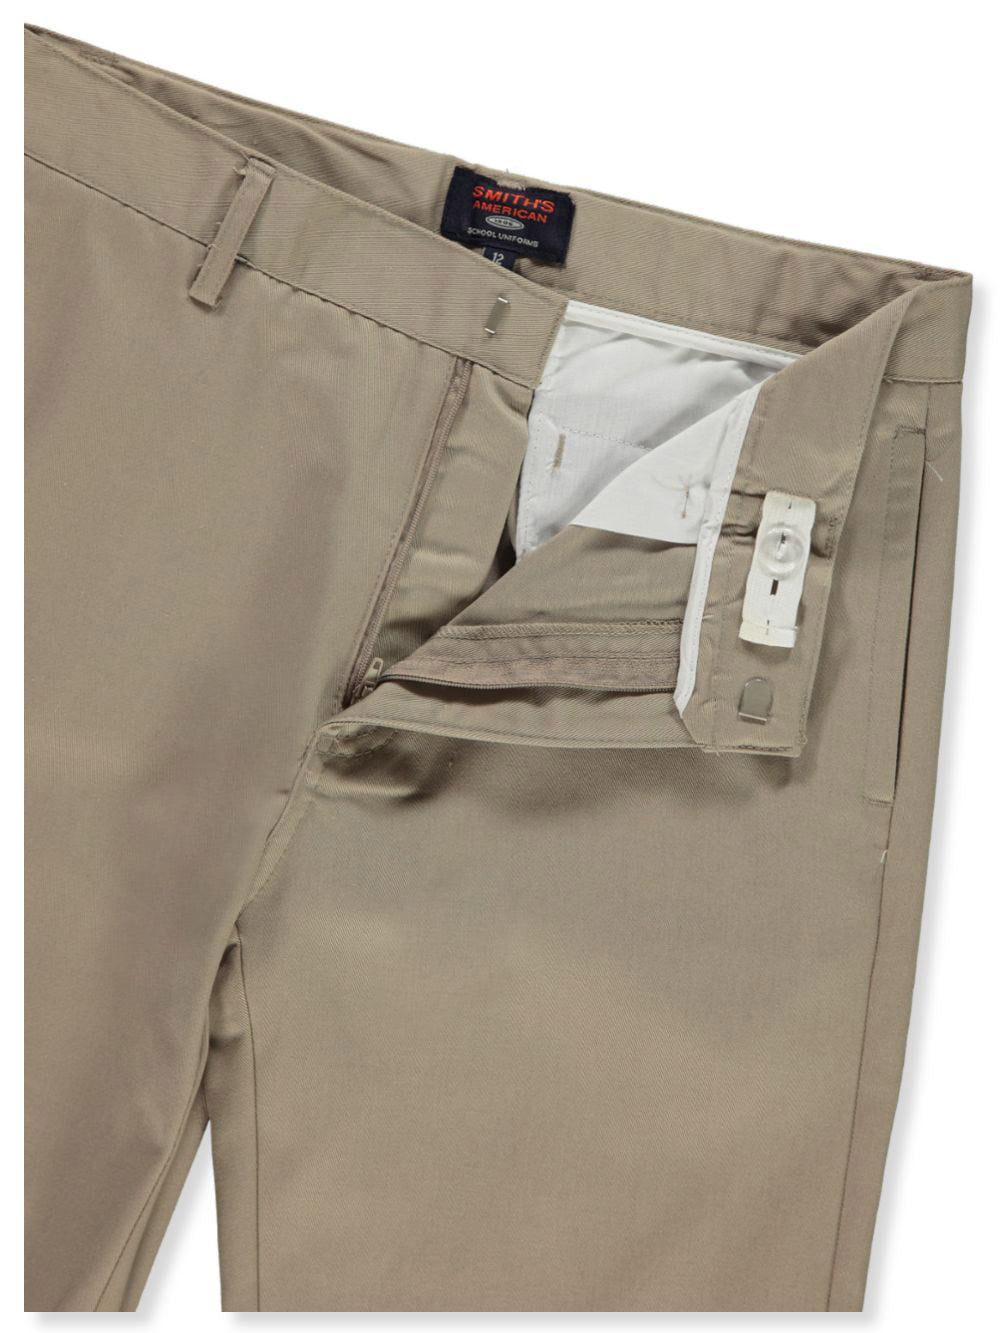 Smith's American Boys' Flat Front Twill Uniform / Dress Pants